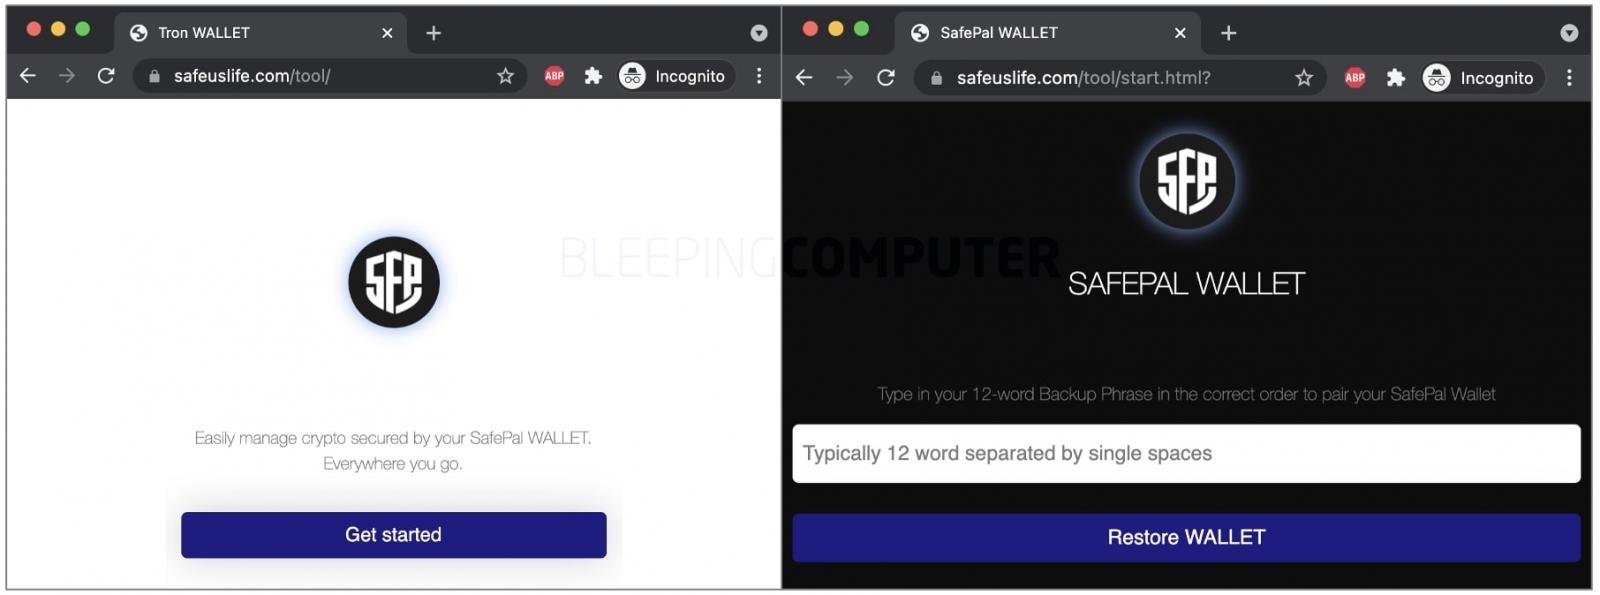 Site phishing do Safepal Wallet usado pelos golpistas.